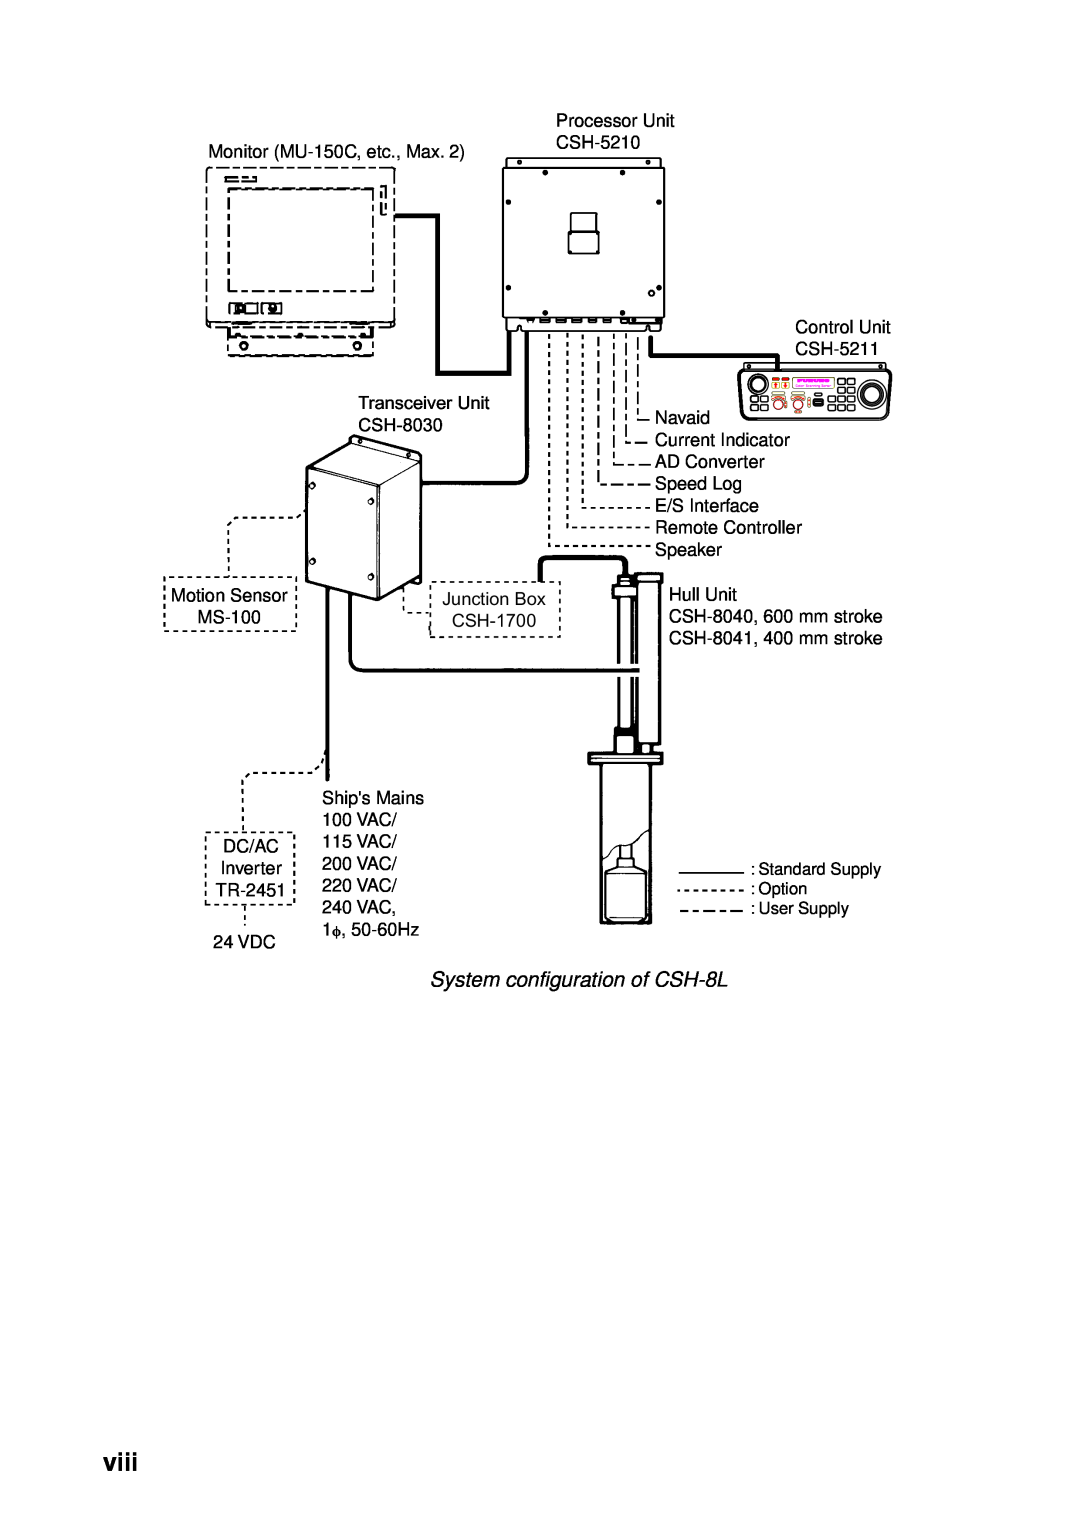 Furuno CSH-5L/CSH-8L manual viii, System configuration of CSH-8L, Transceiver Unit CSH-8030, Junction Box CSH-1700 